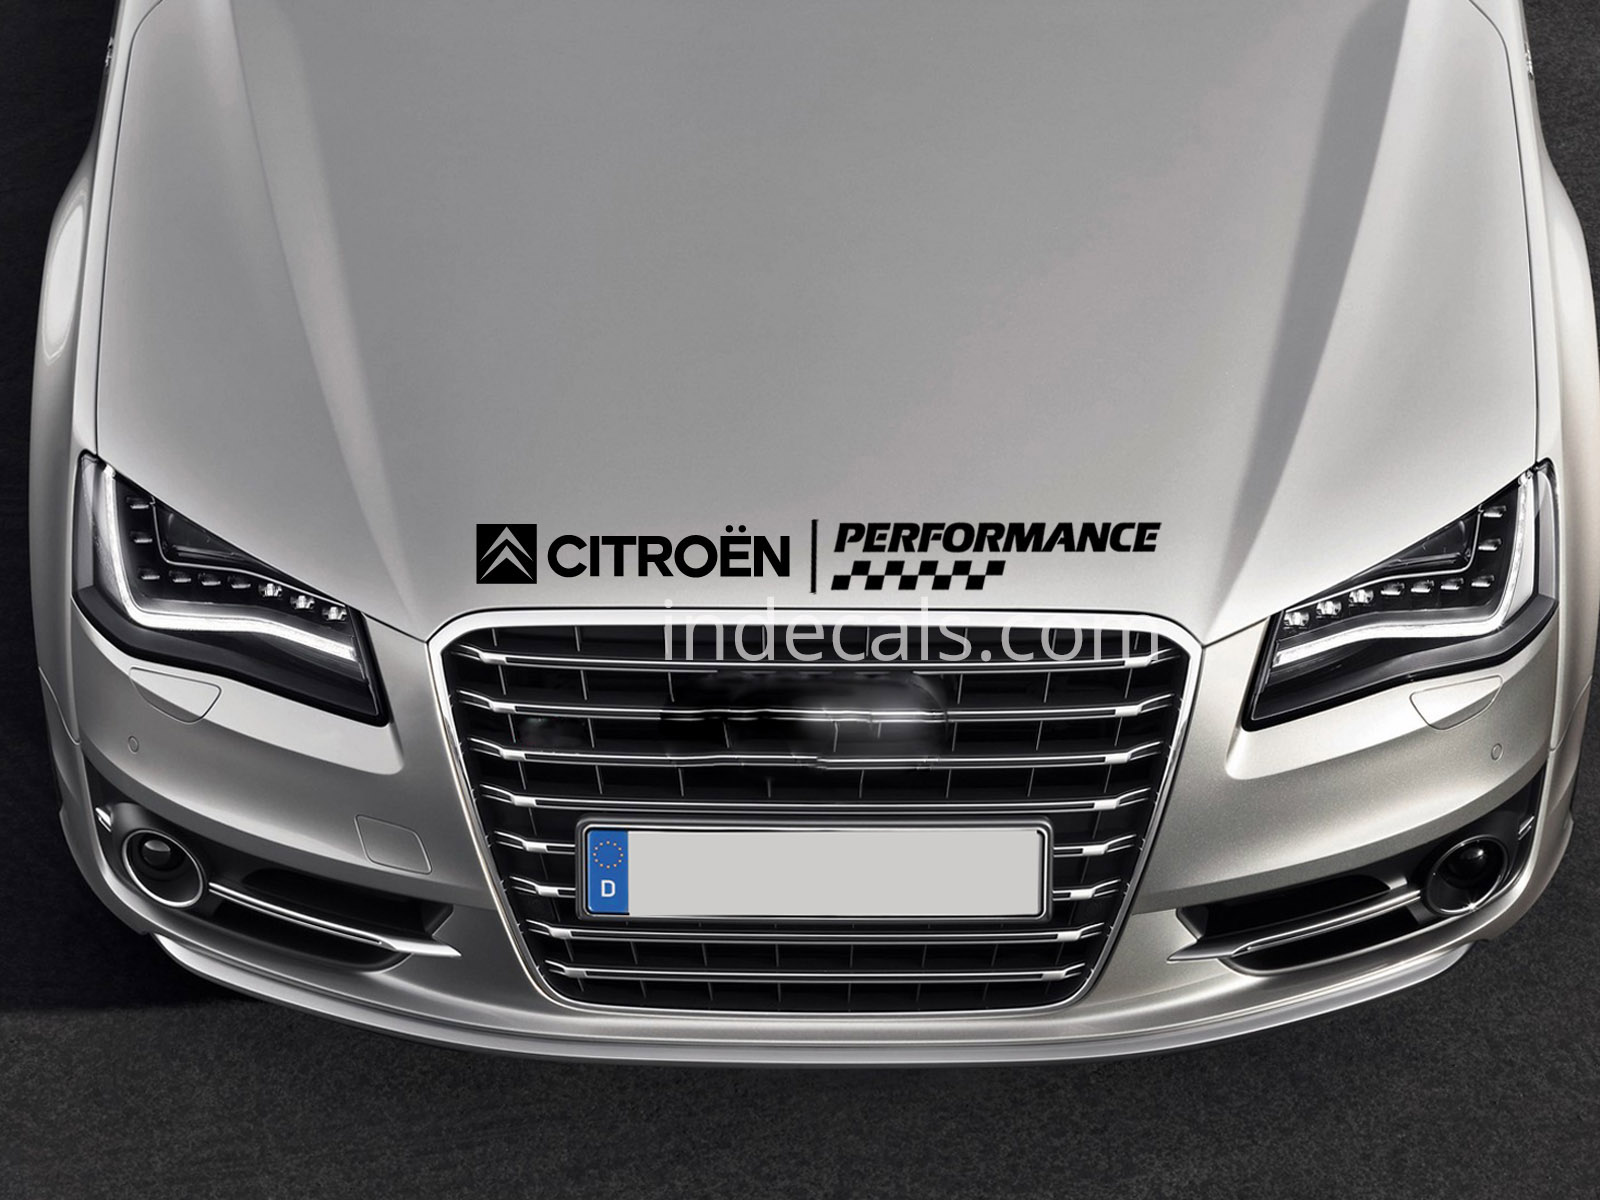 1 x Citroen Performance Sticker for Bonnet - Black